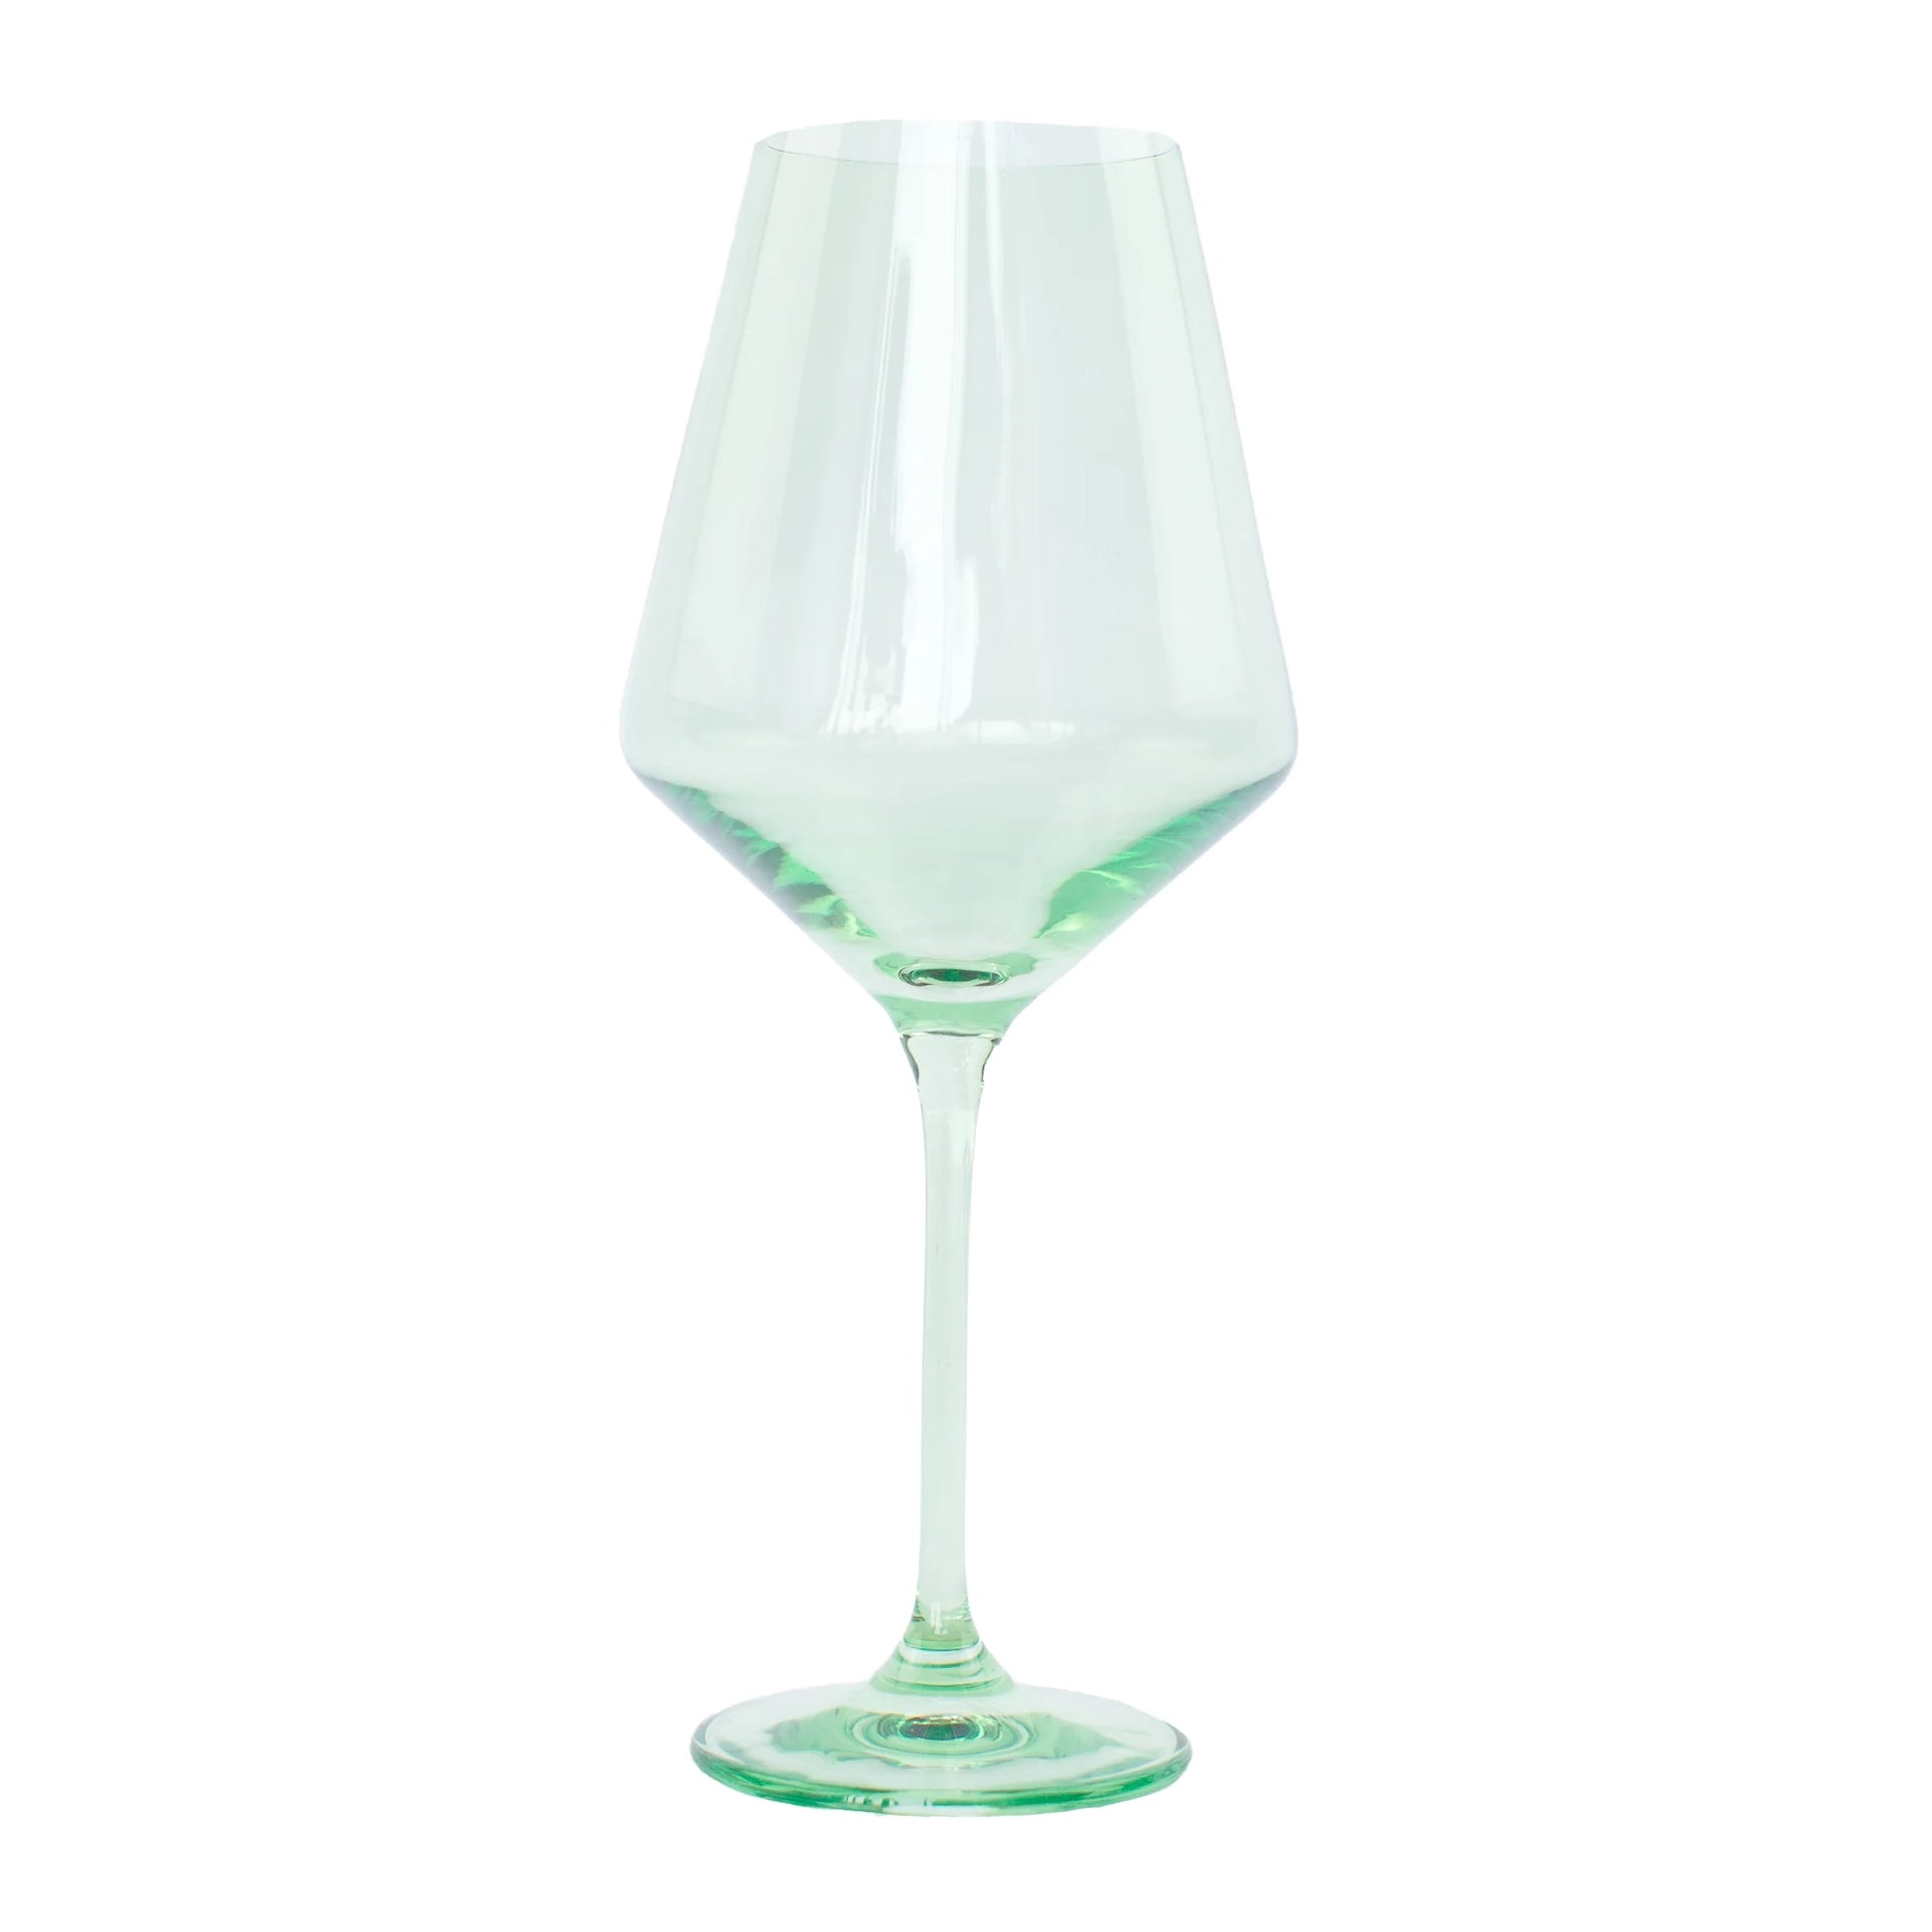 Estelle Colored Glass Hand-Blown Wine Glass 6-Piece Set Emerald Green